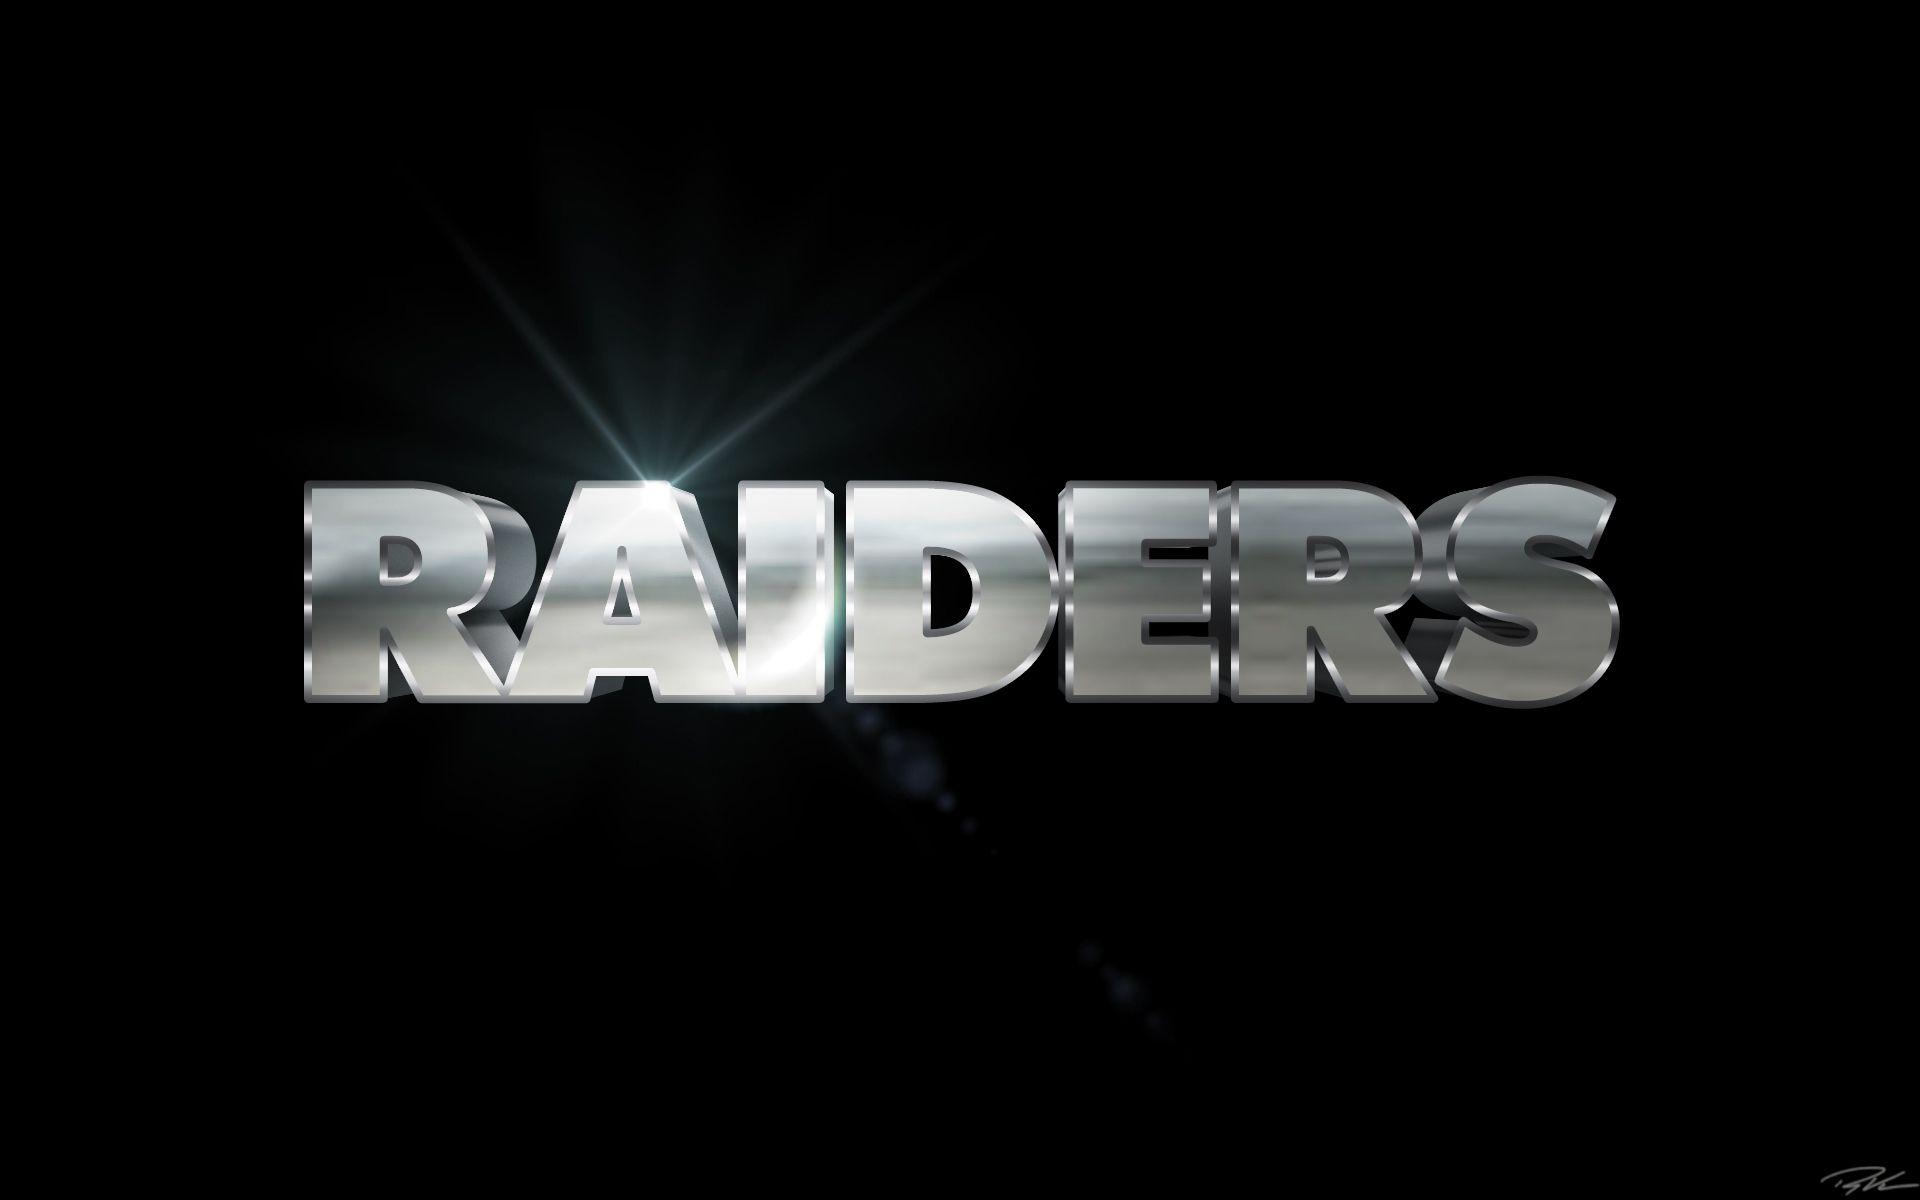 RAIDERS Wallpaper Download. Raiders wallpaper, Oakland raiders, Raiders football